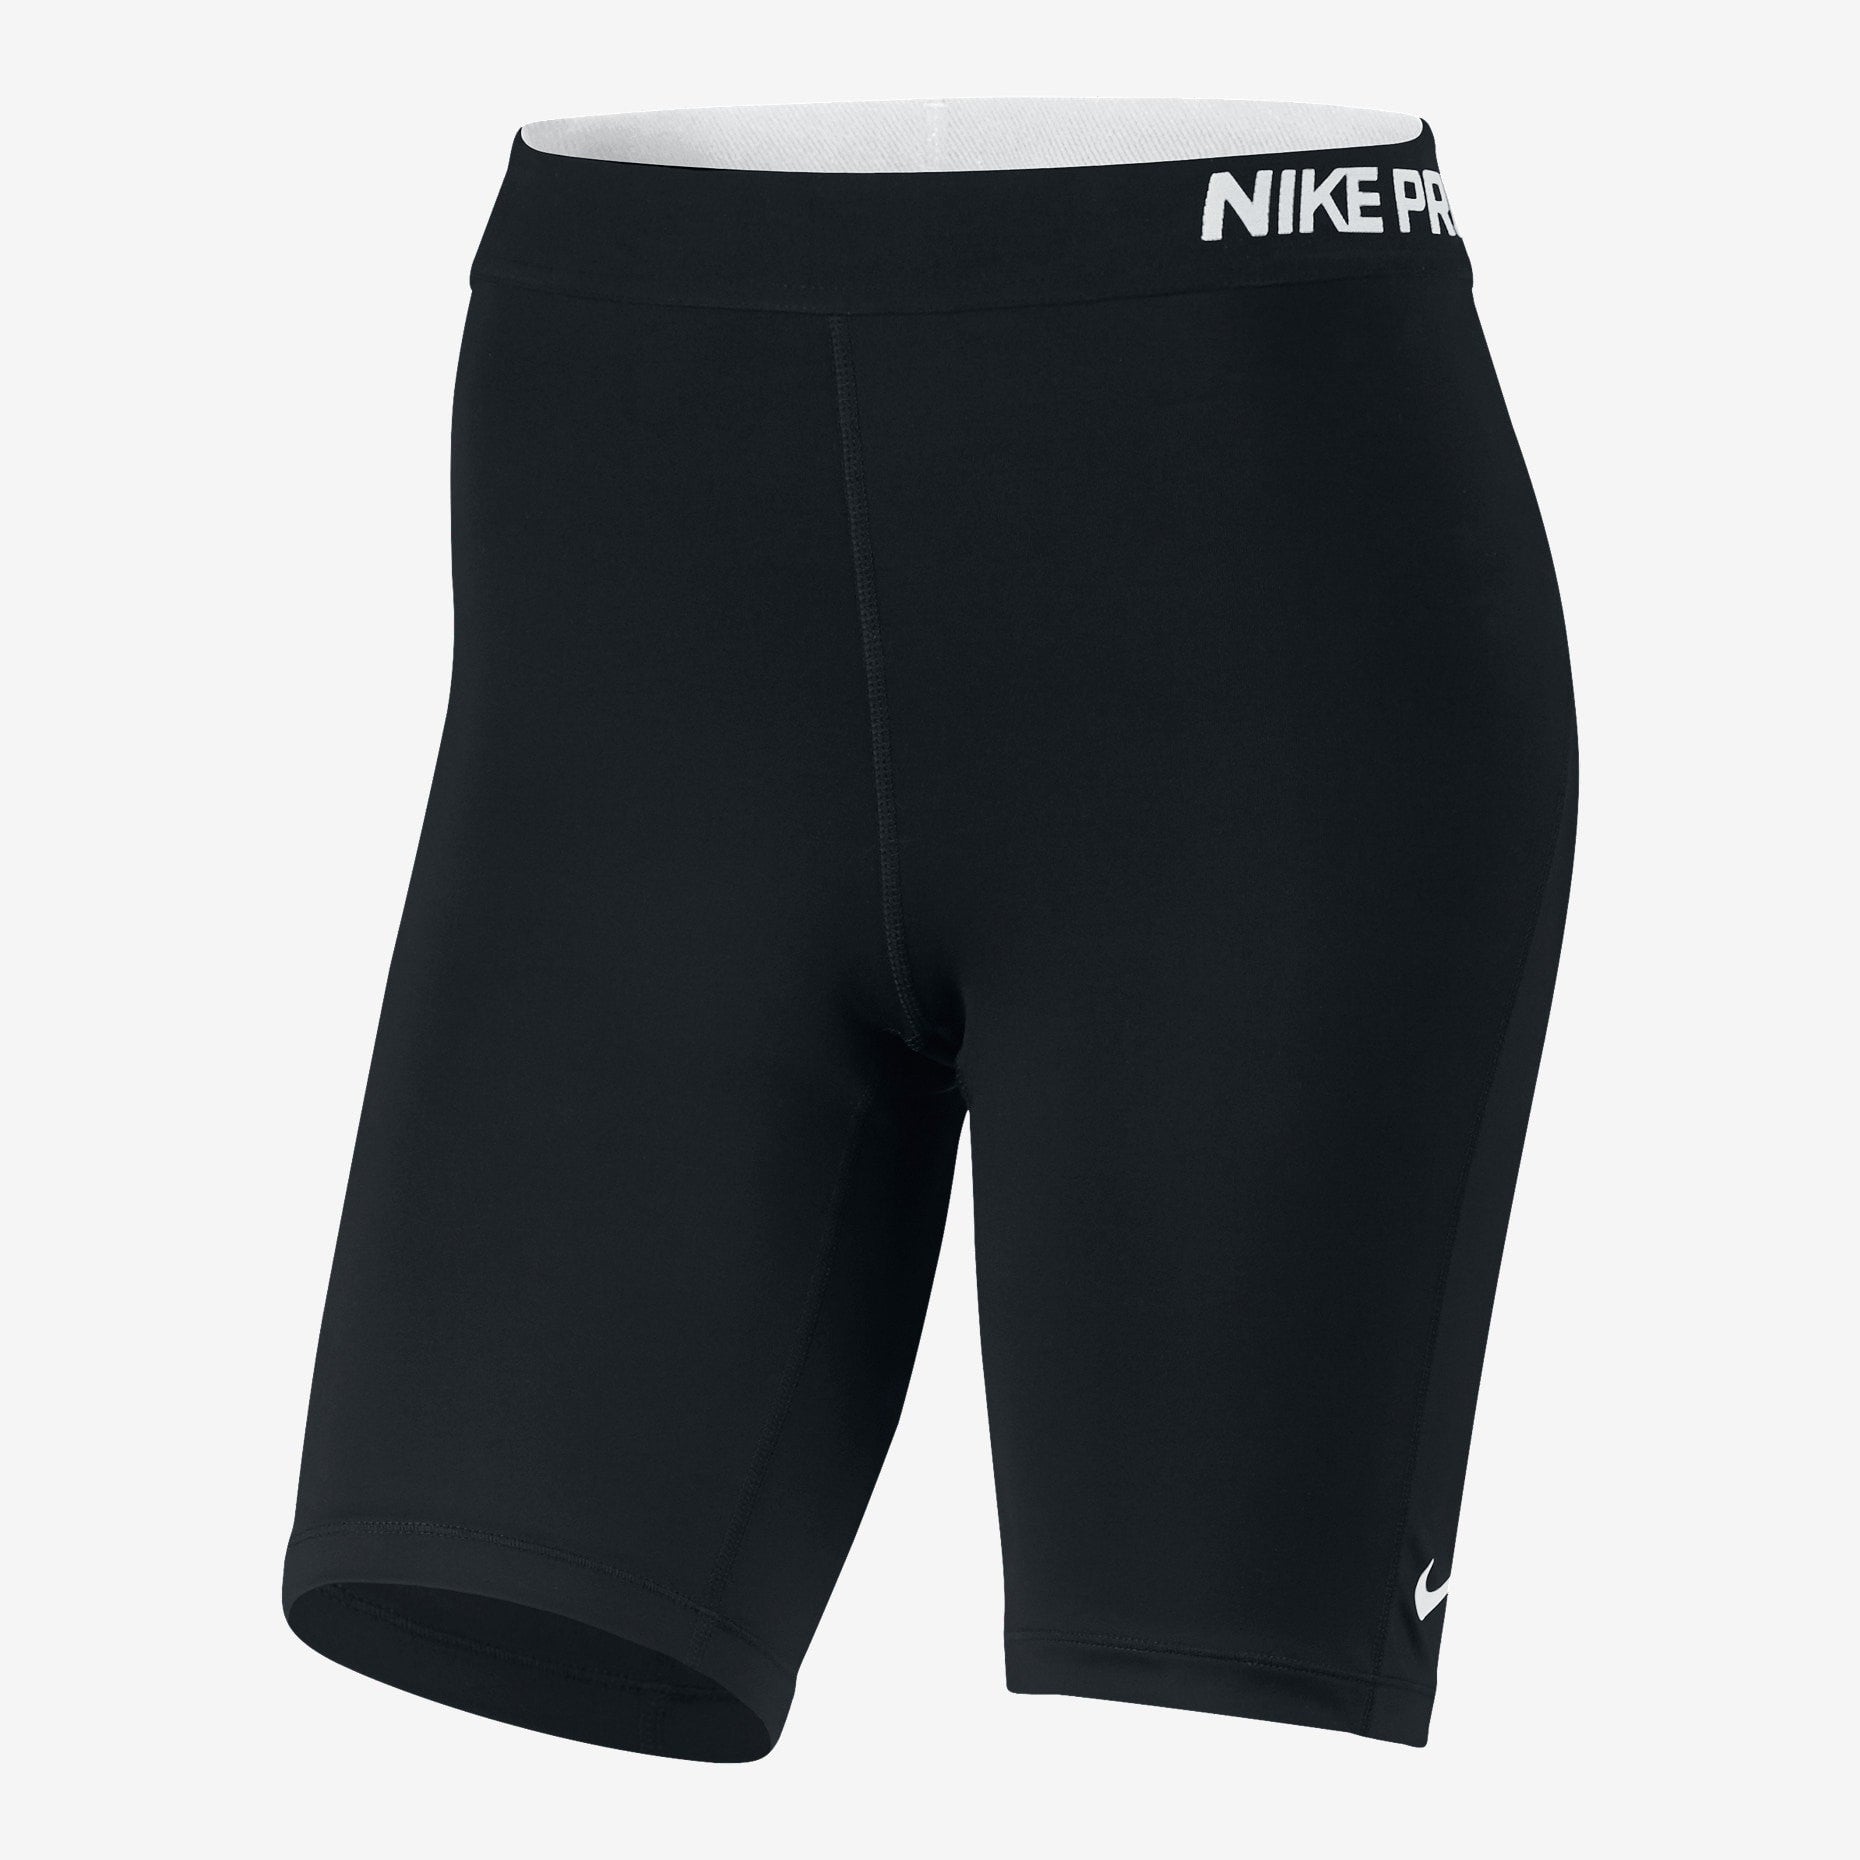 Nike Pro Women’s Training Bra & Short Sets - Small - New ~ CJ2460 073